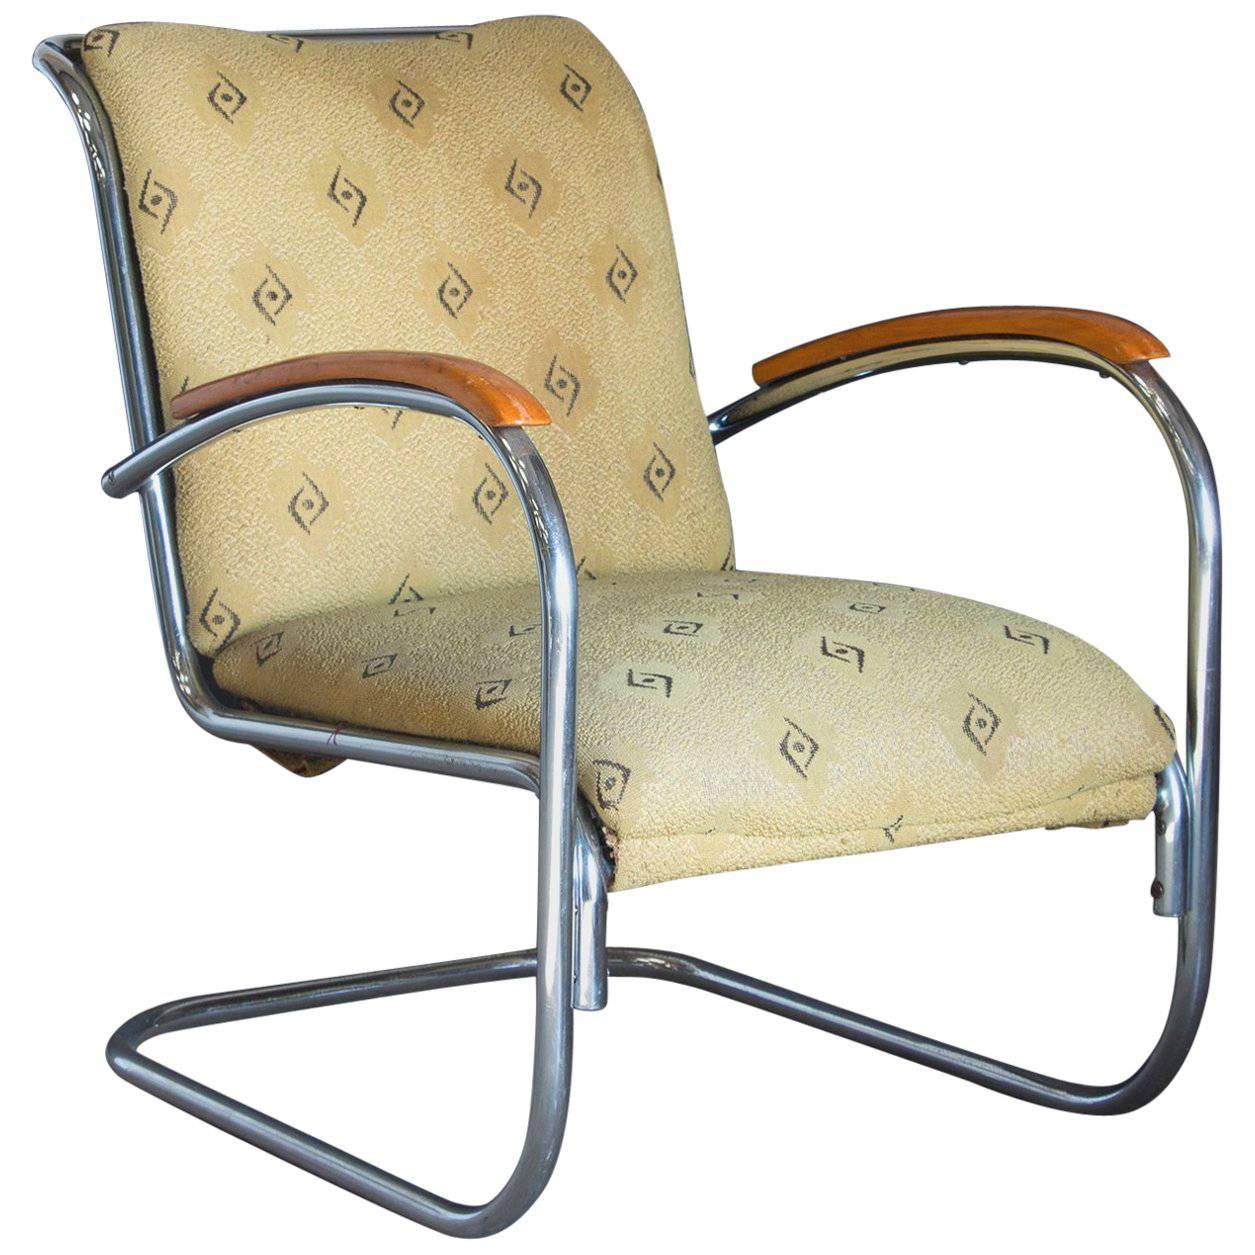 Original, Early Vintage Tubular Easy Chair with Original Fabric, circa 1930